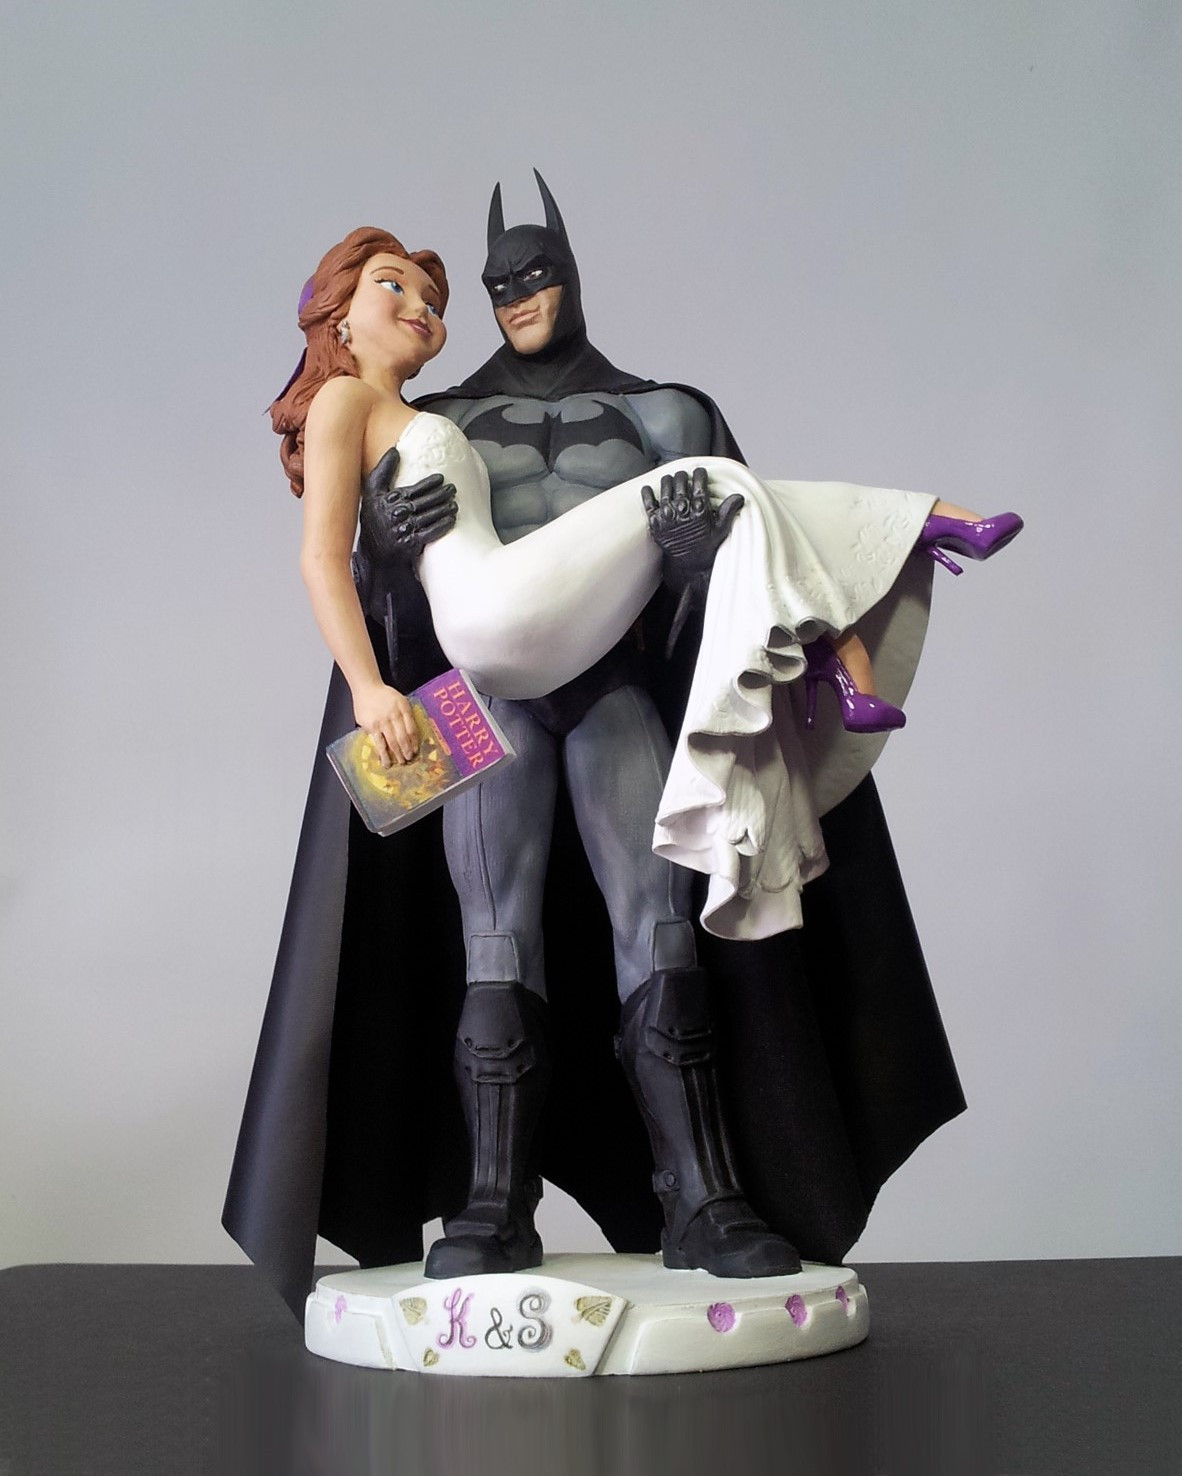 Batman Wedding Cake Topper
 TOP 10 Batman wedding cake toppers idea in 2017